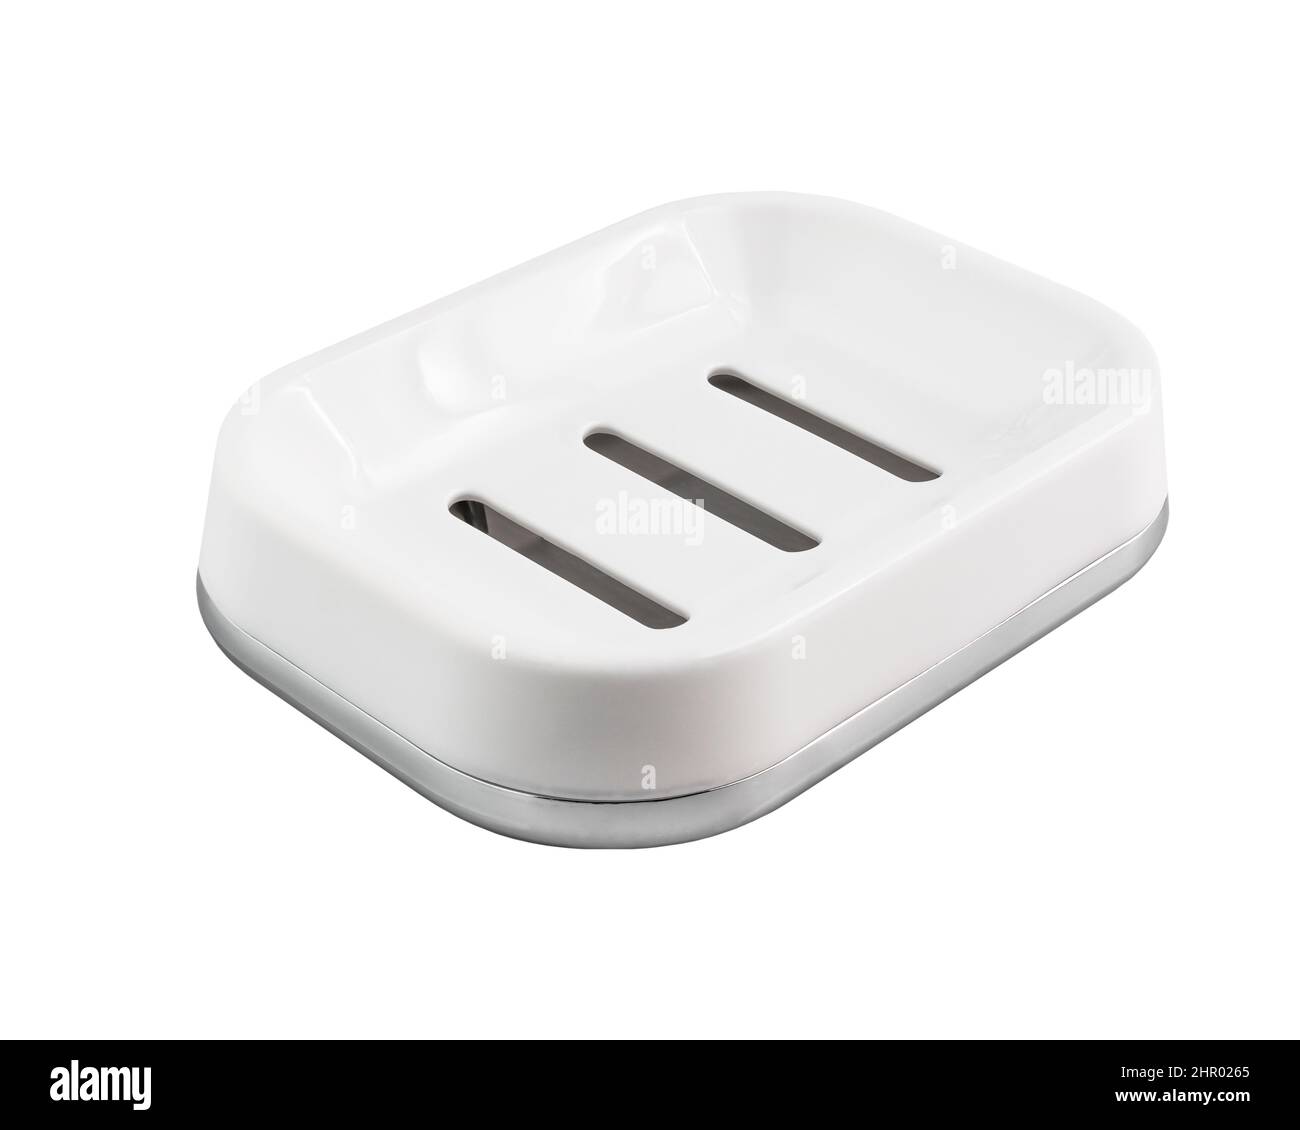 Bathroom: White empty soap dish on white background, isolation. Studio shot. Hygiene theme - toiletries Stock Photo